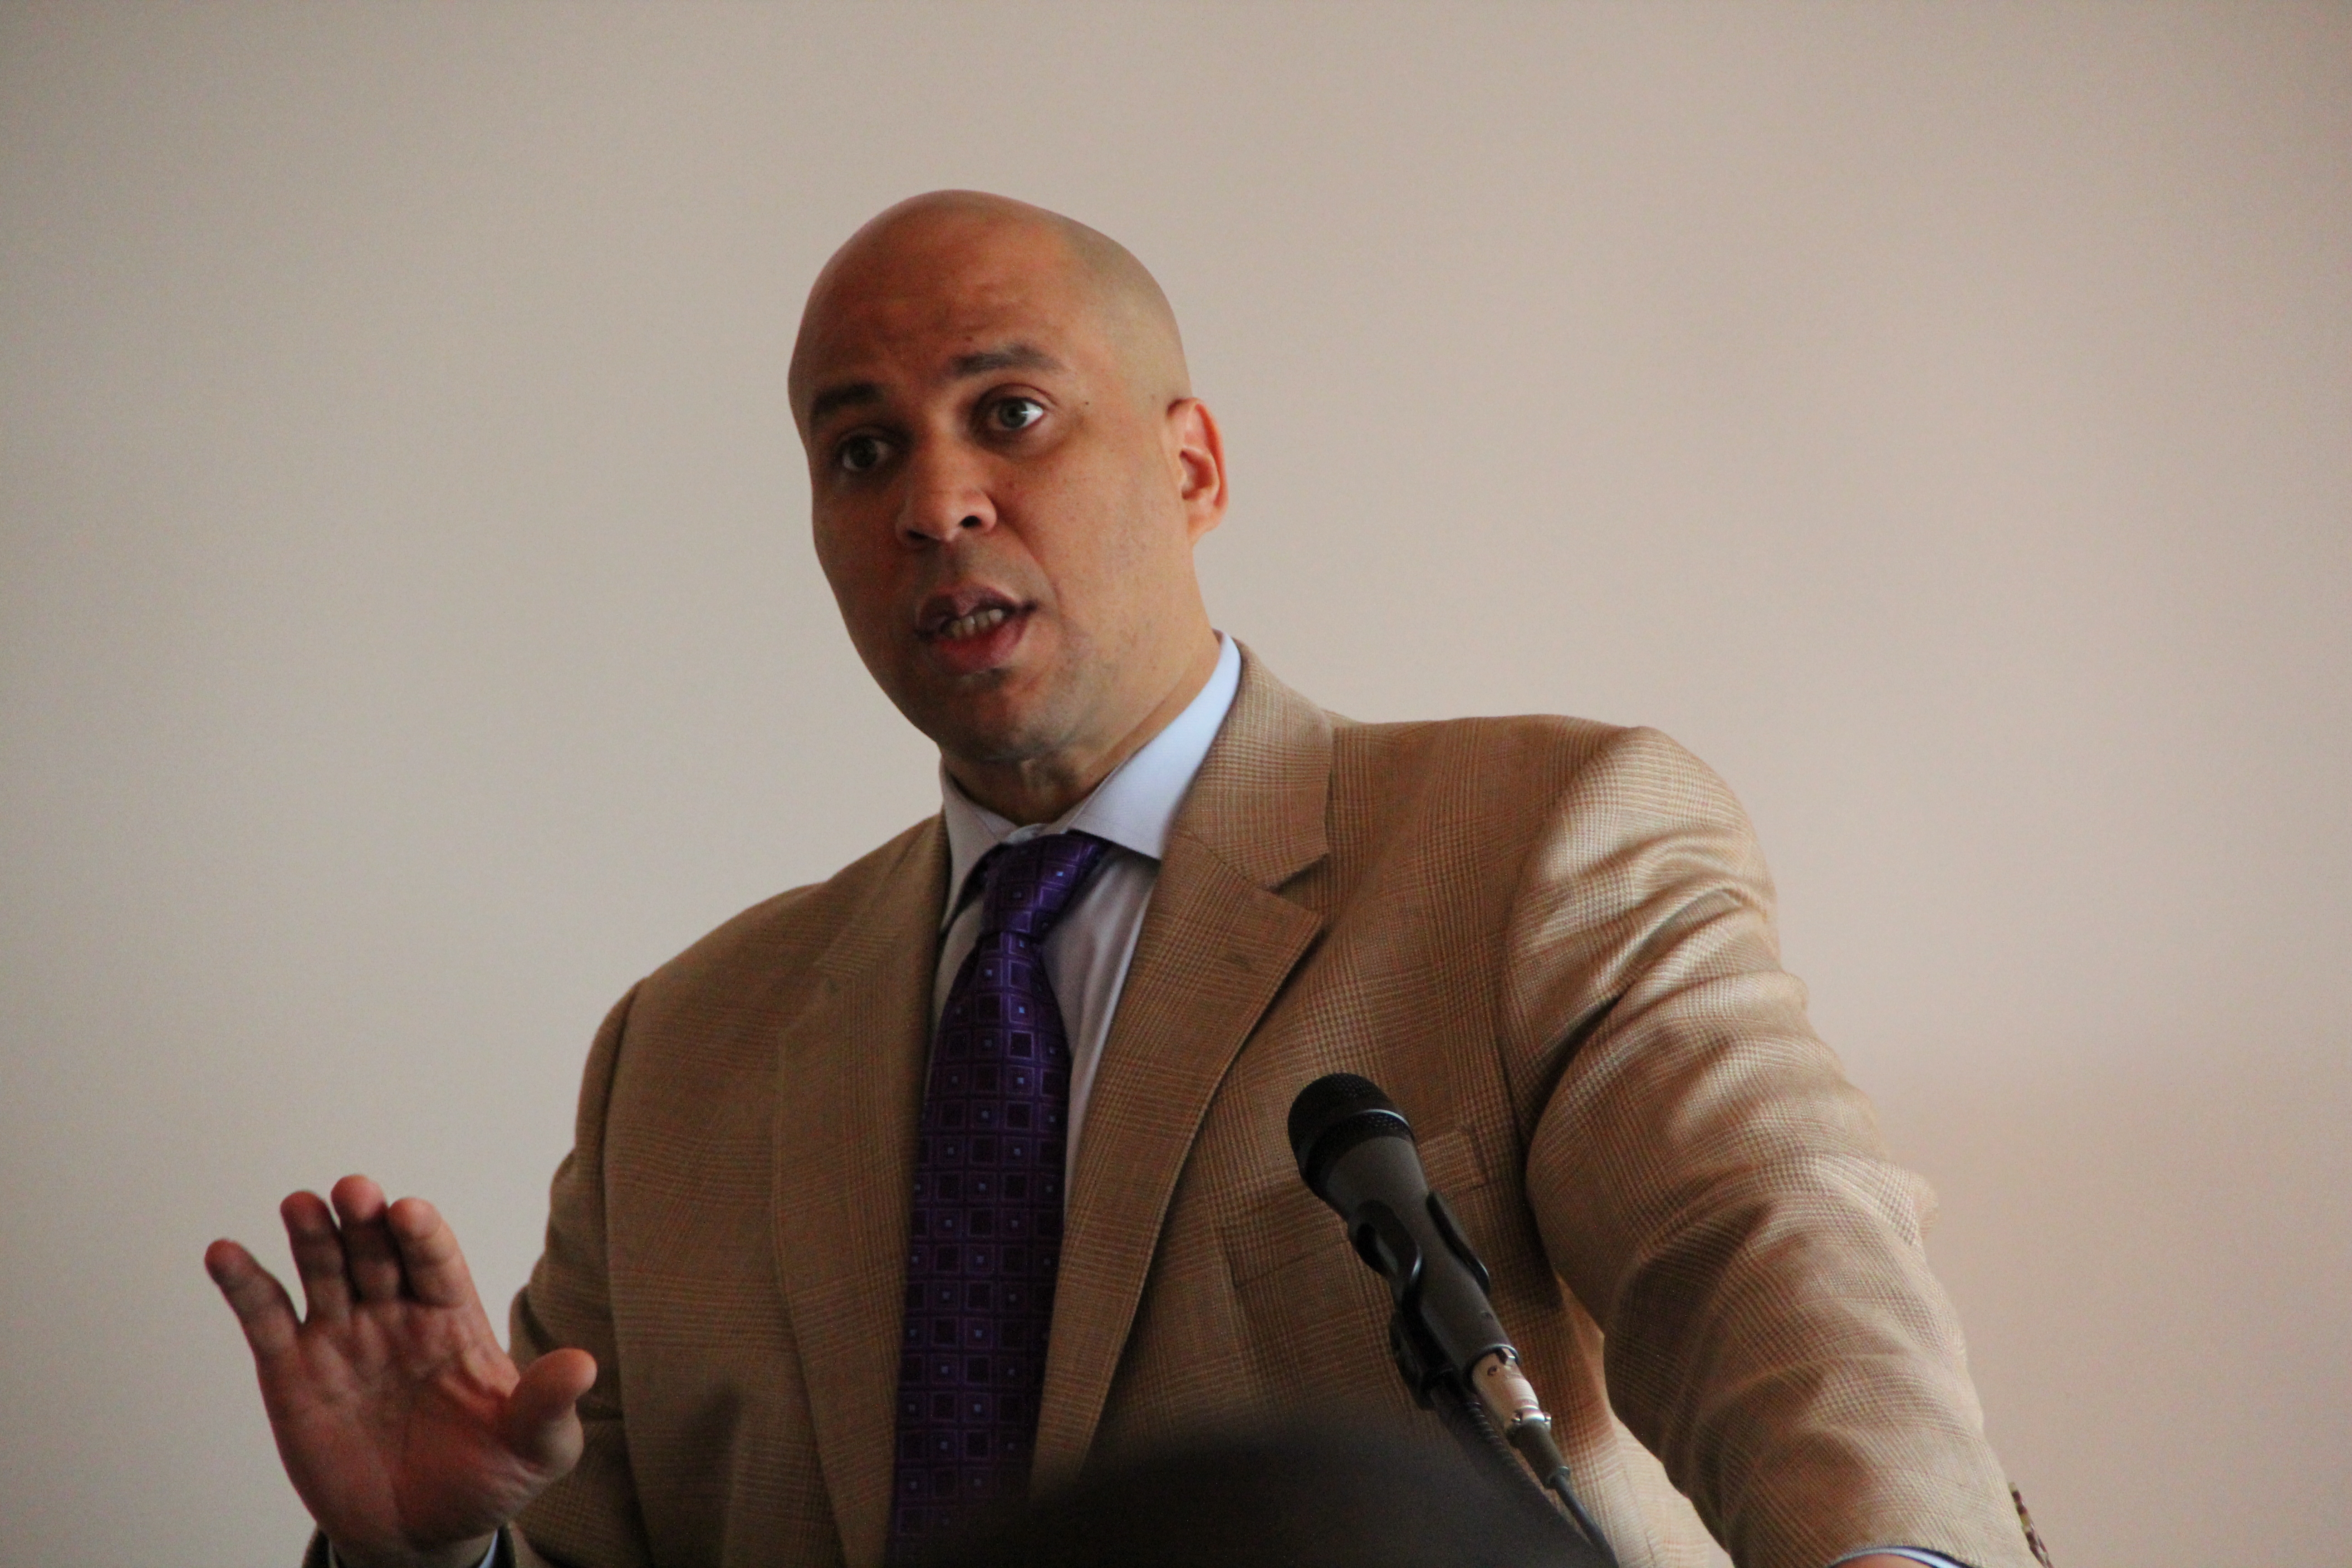 Newark mayor Cory Booker on Trayvon Martin shooting: "I am praying for justice"